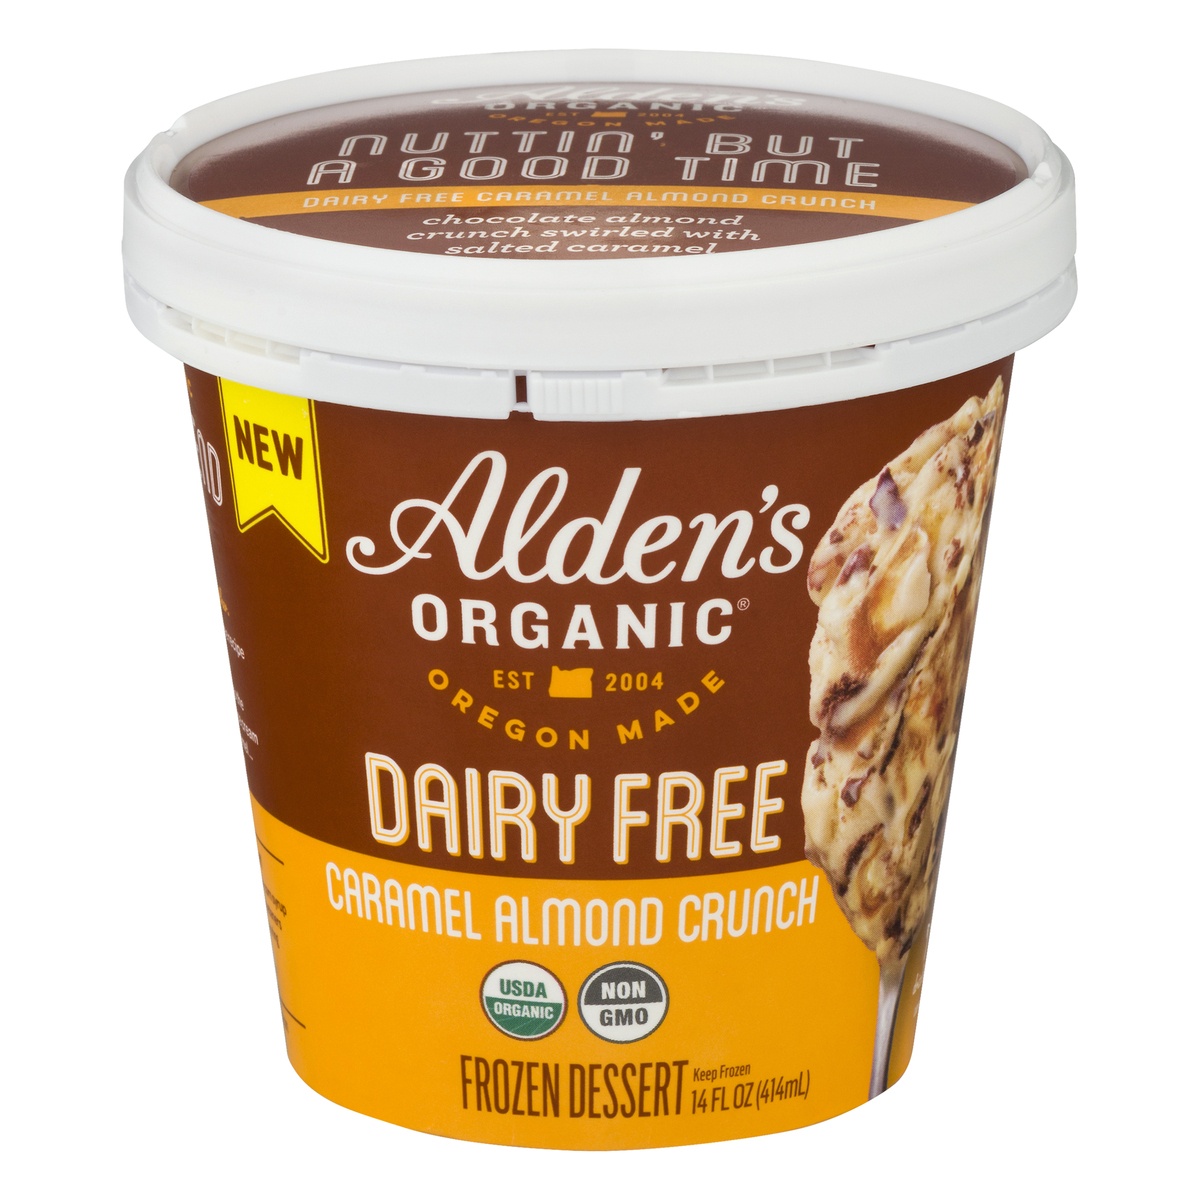 slide 1 of 1, Alden's Organic Dairy Free Caramel Almond Crunch Ice Cream, 14 oz